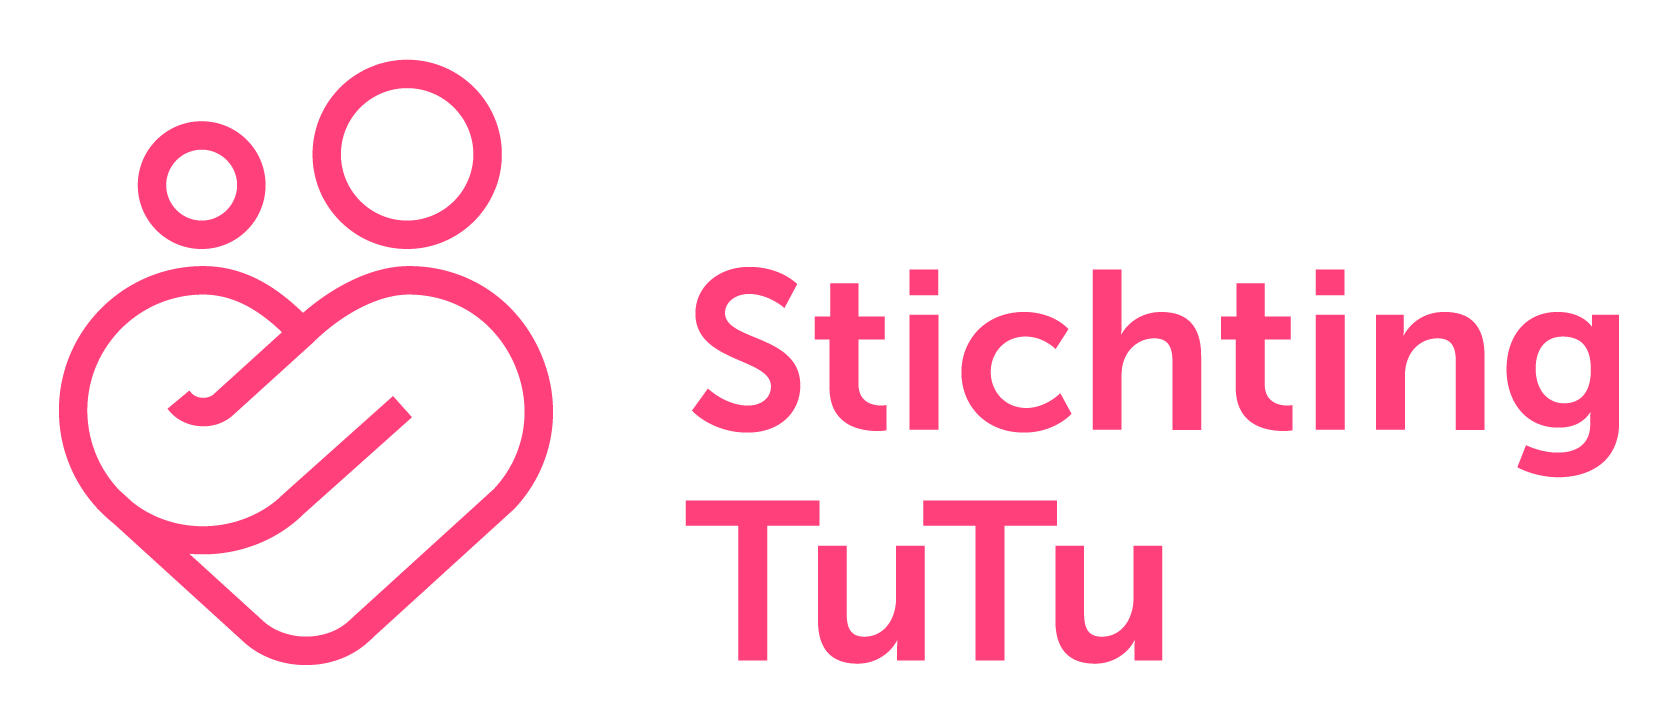 StichtingTutu-Logo-Medium.png